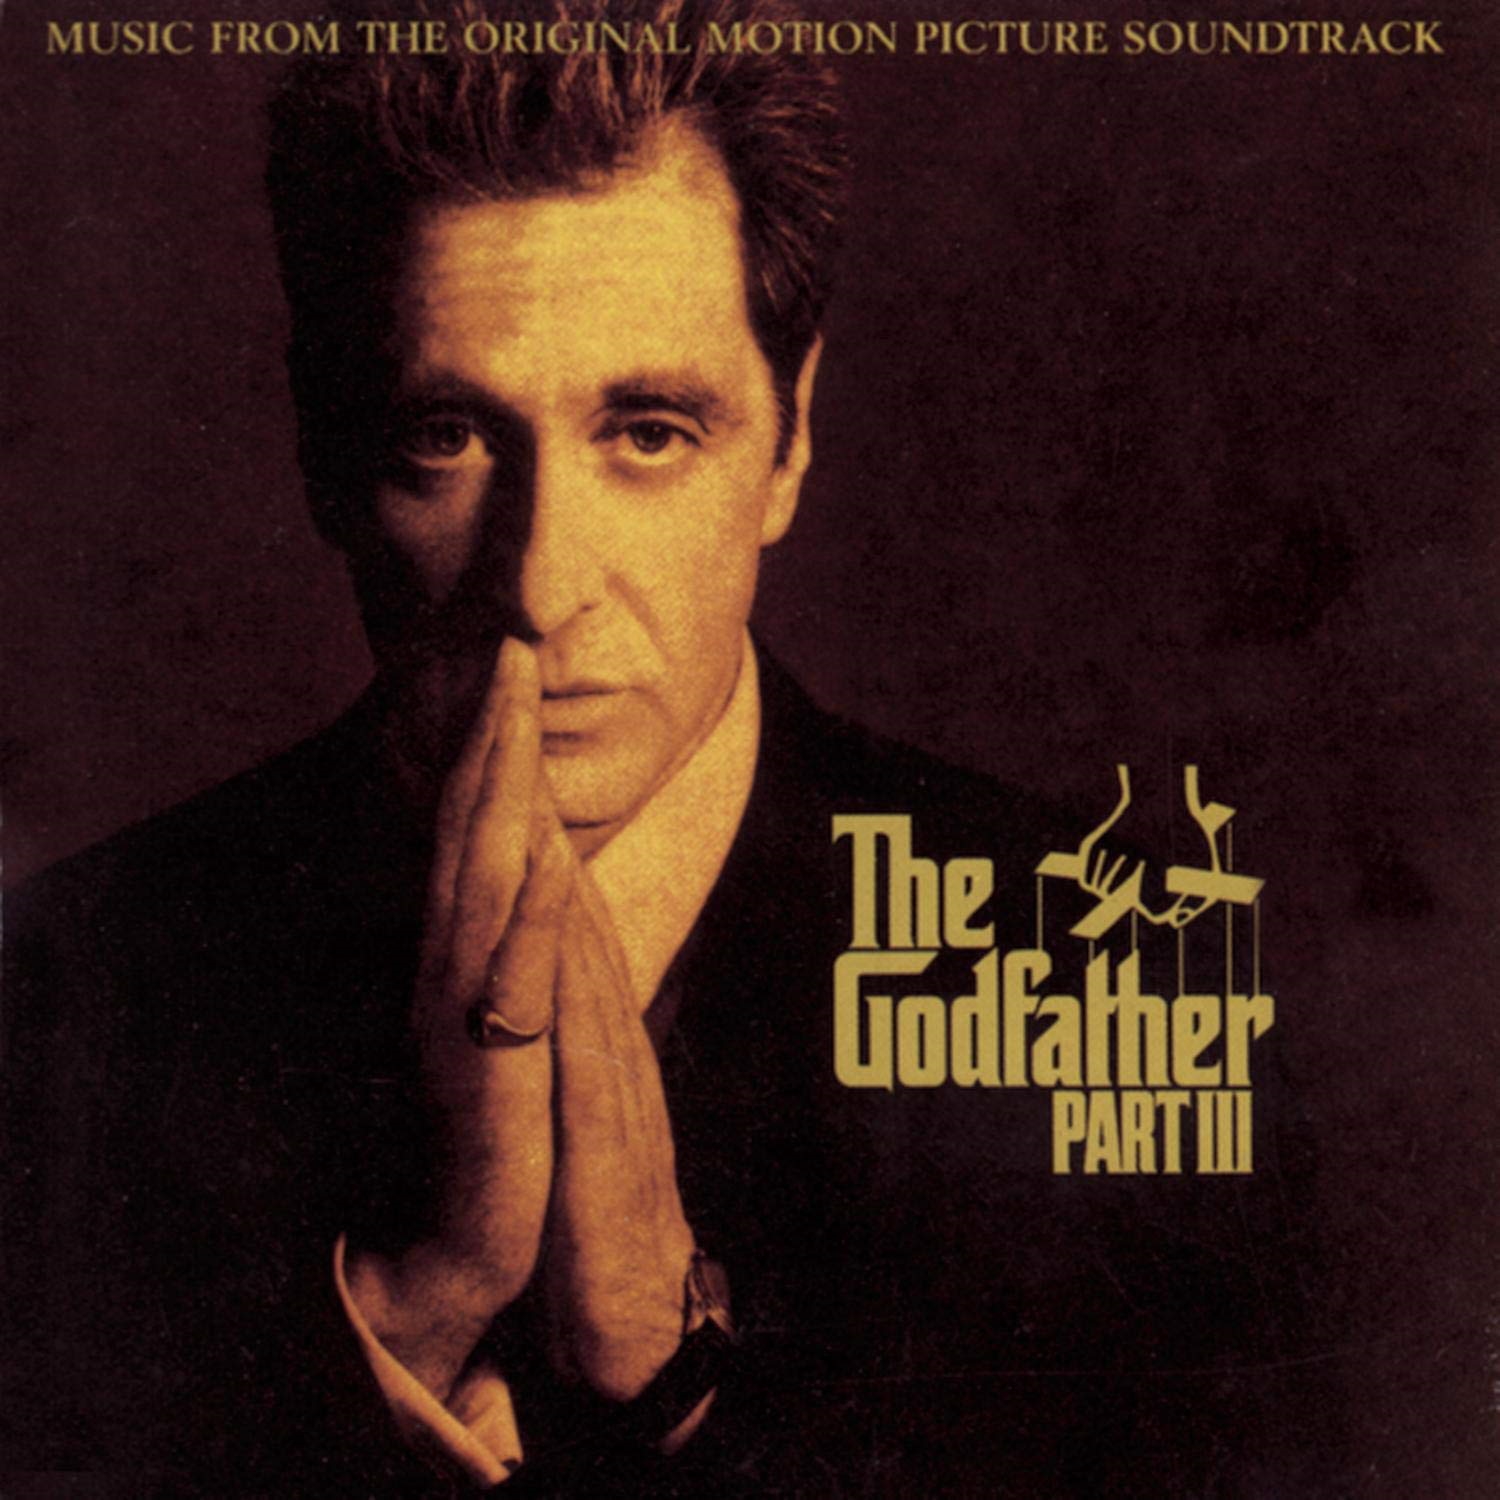 Nino Rota - The Godfather Part III (OST)